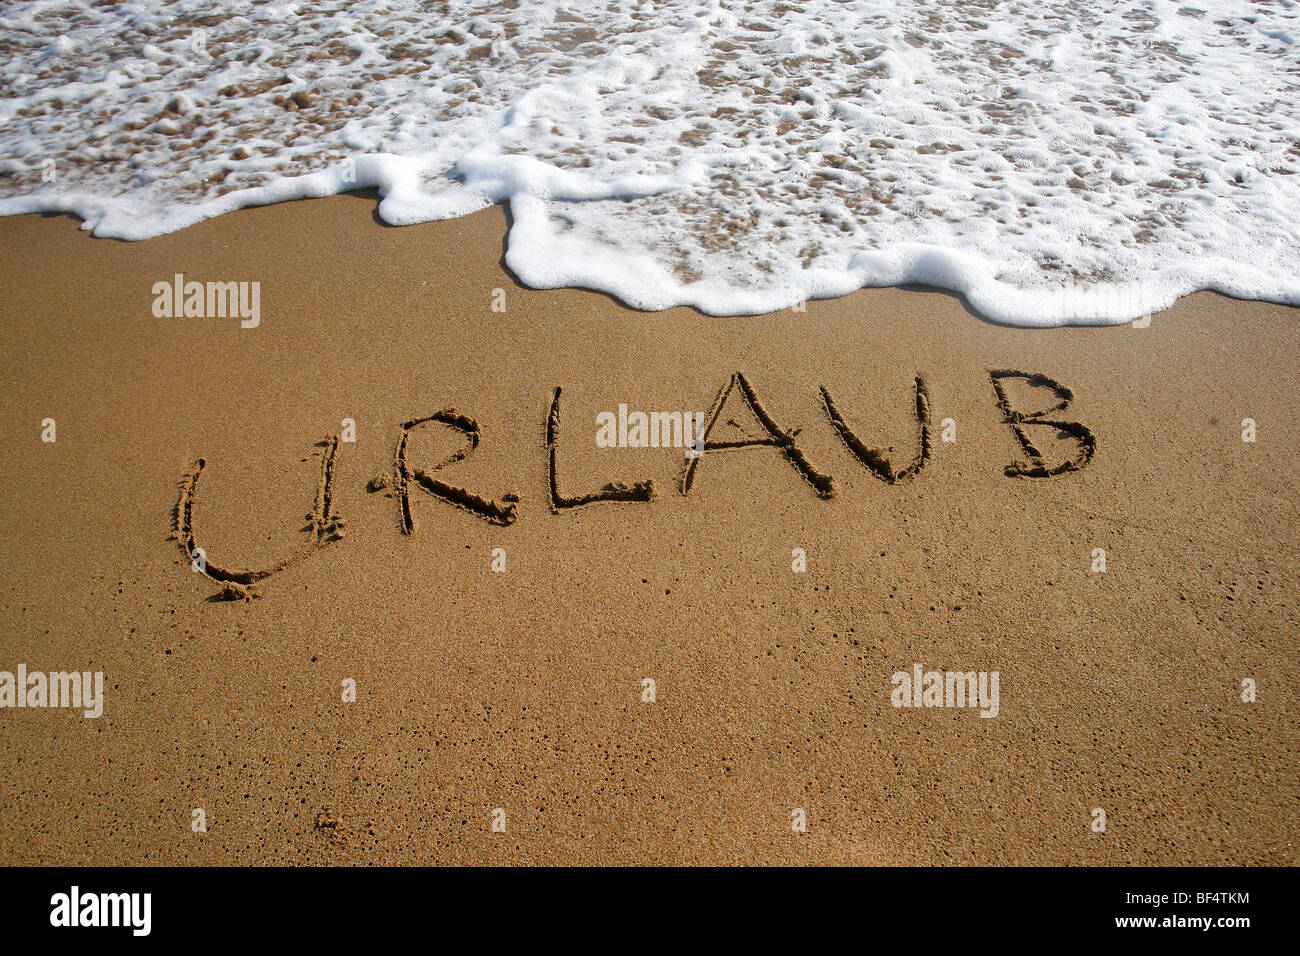 Urlaub, German for Holiday, written in the sand on a beach, Corfu, Greece, Europe Stock Photo